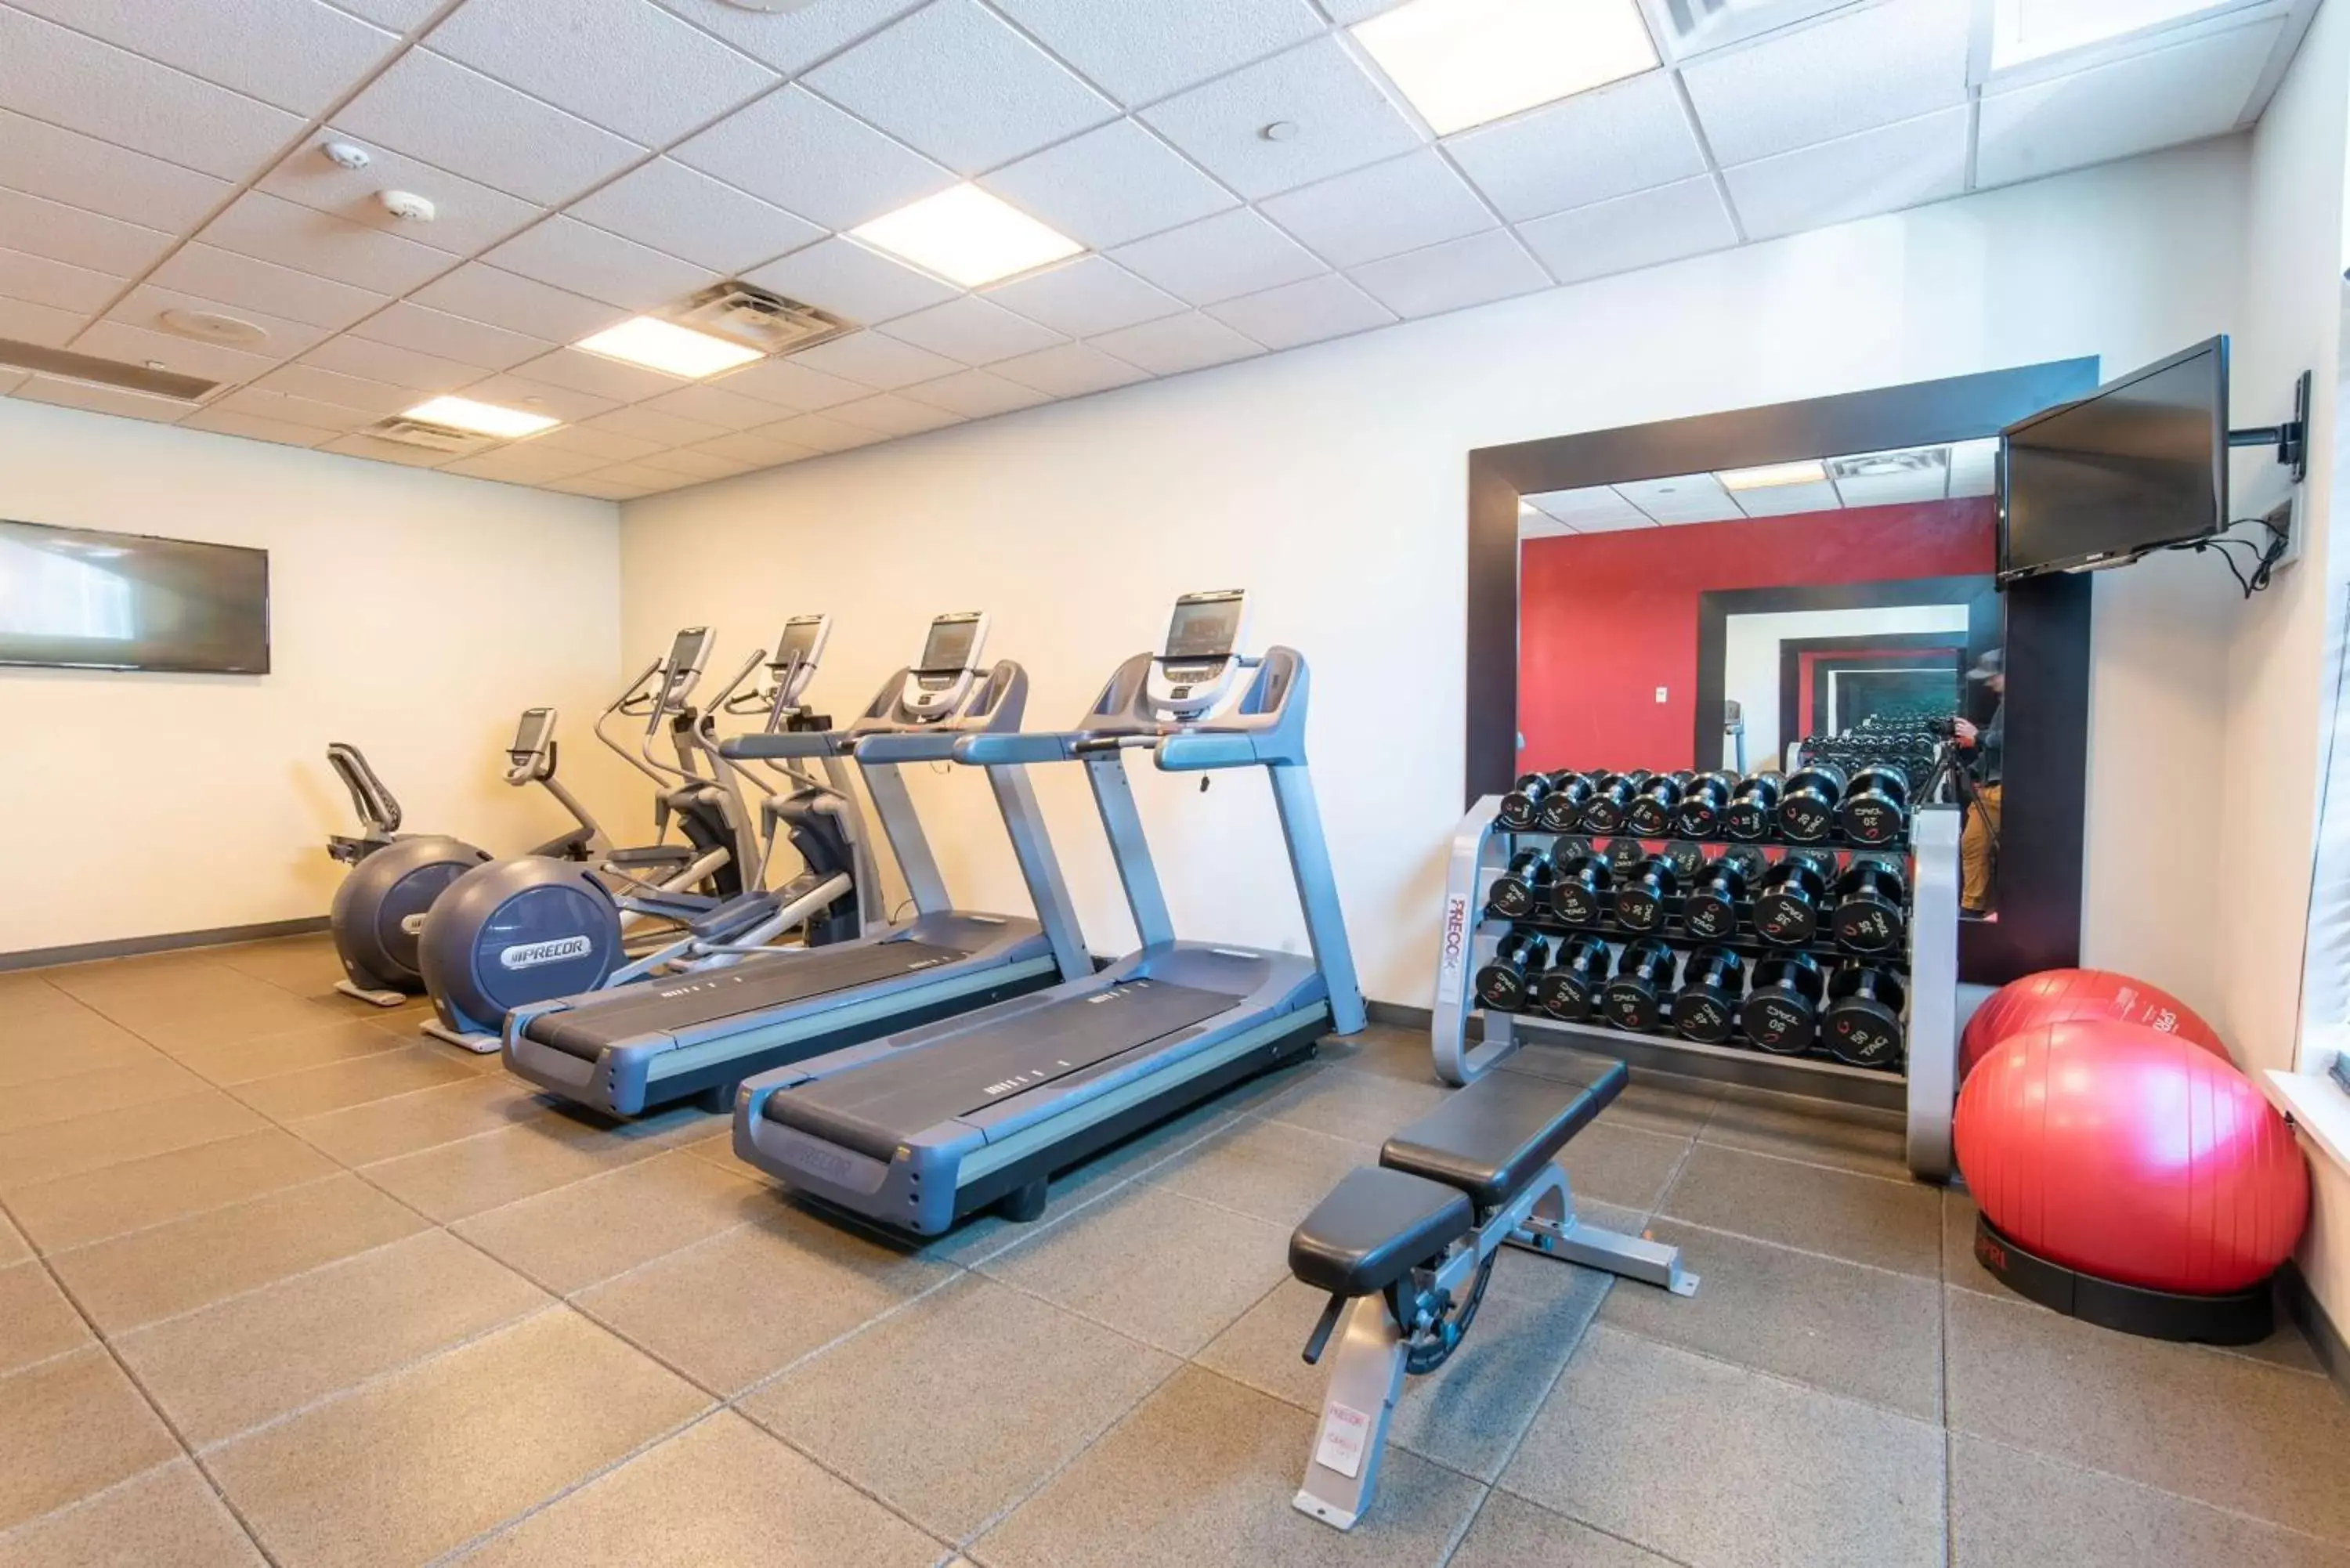 Fitness centre/facilities, Fitness Center/Facilities in Hilton Garden Inn Ogden